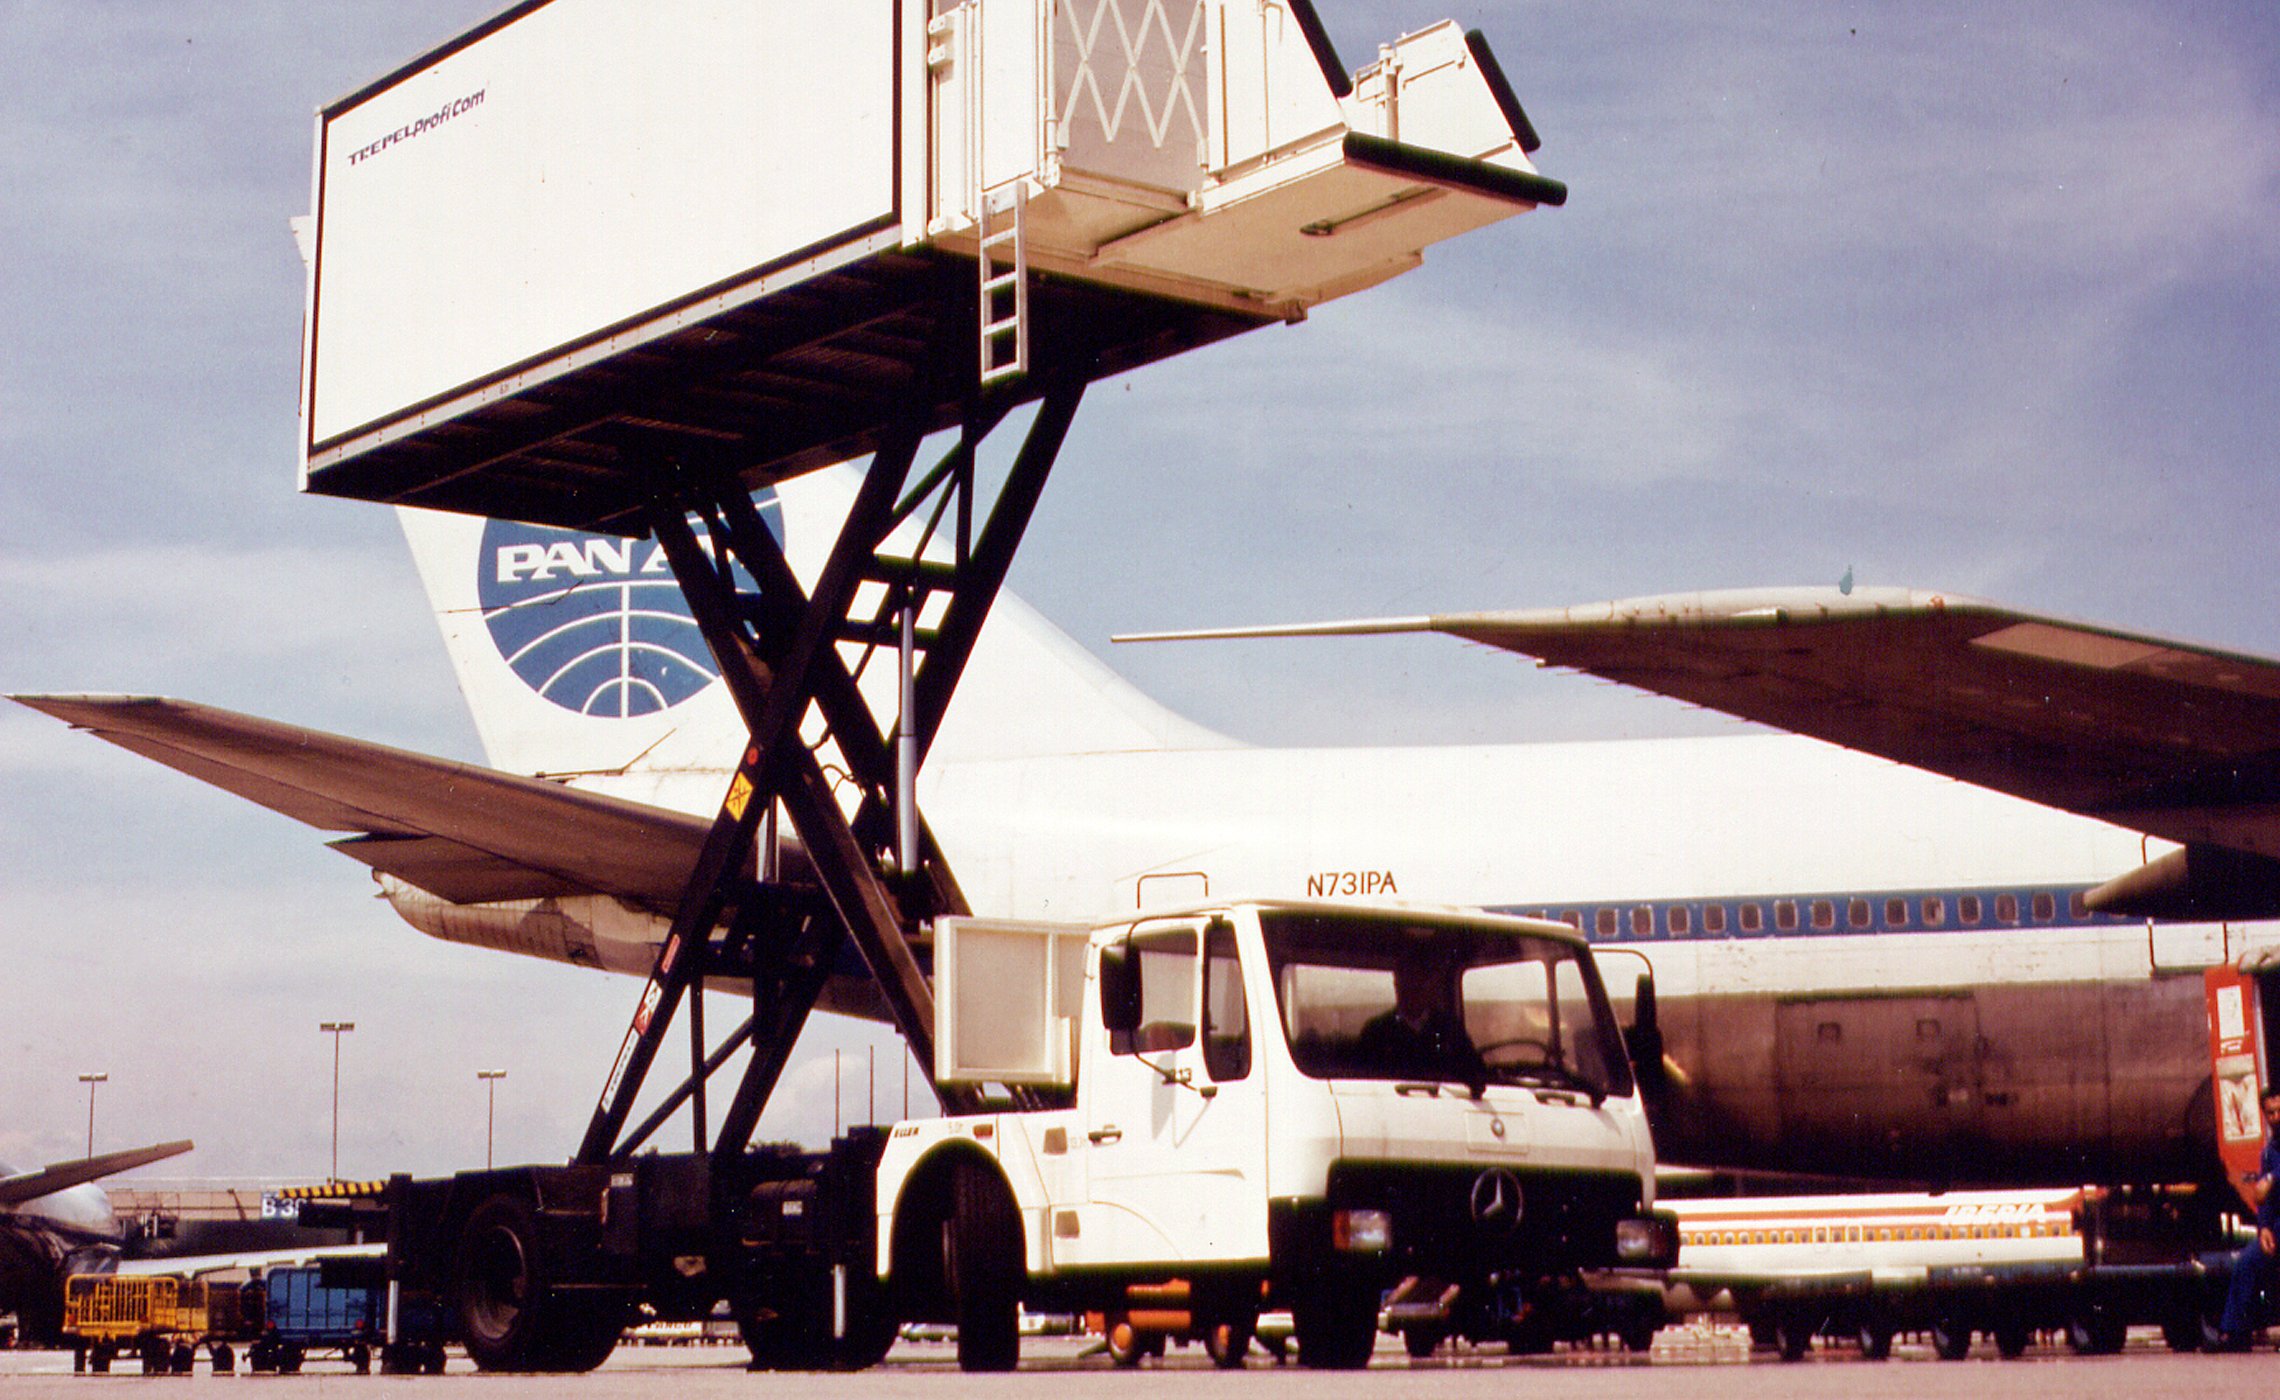 TREPEL Airport Equipment - History 1963